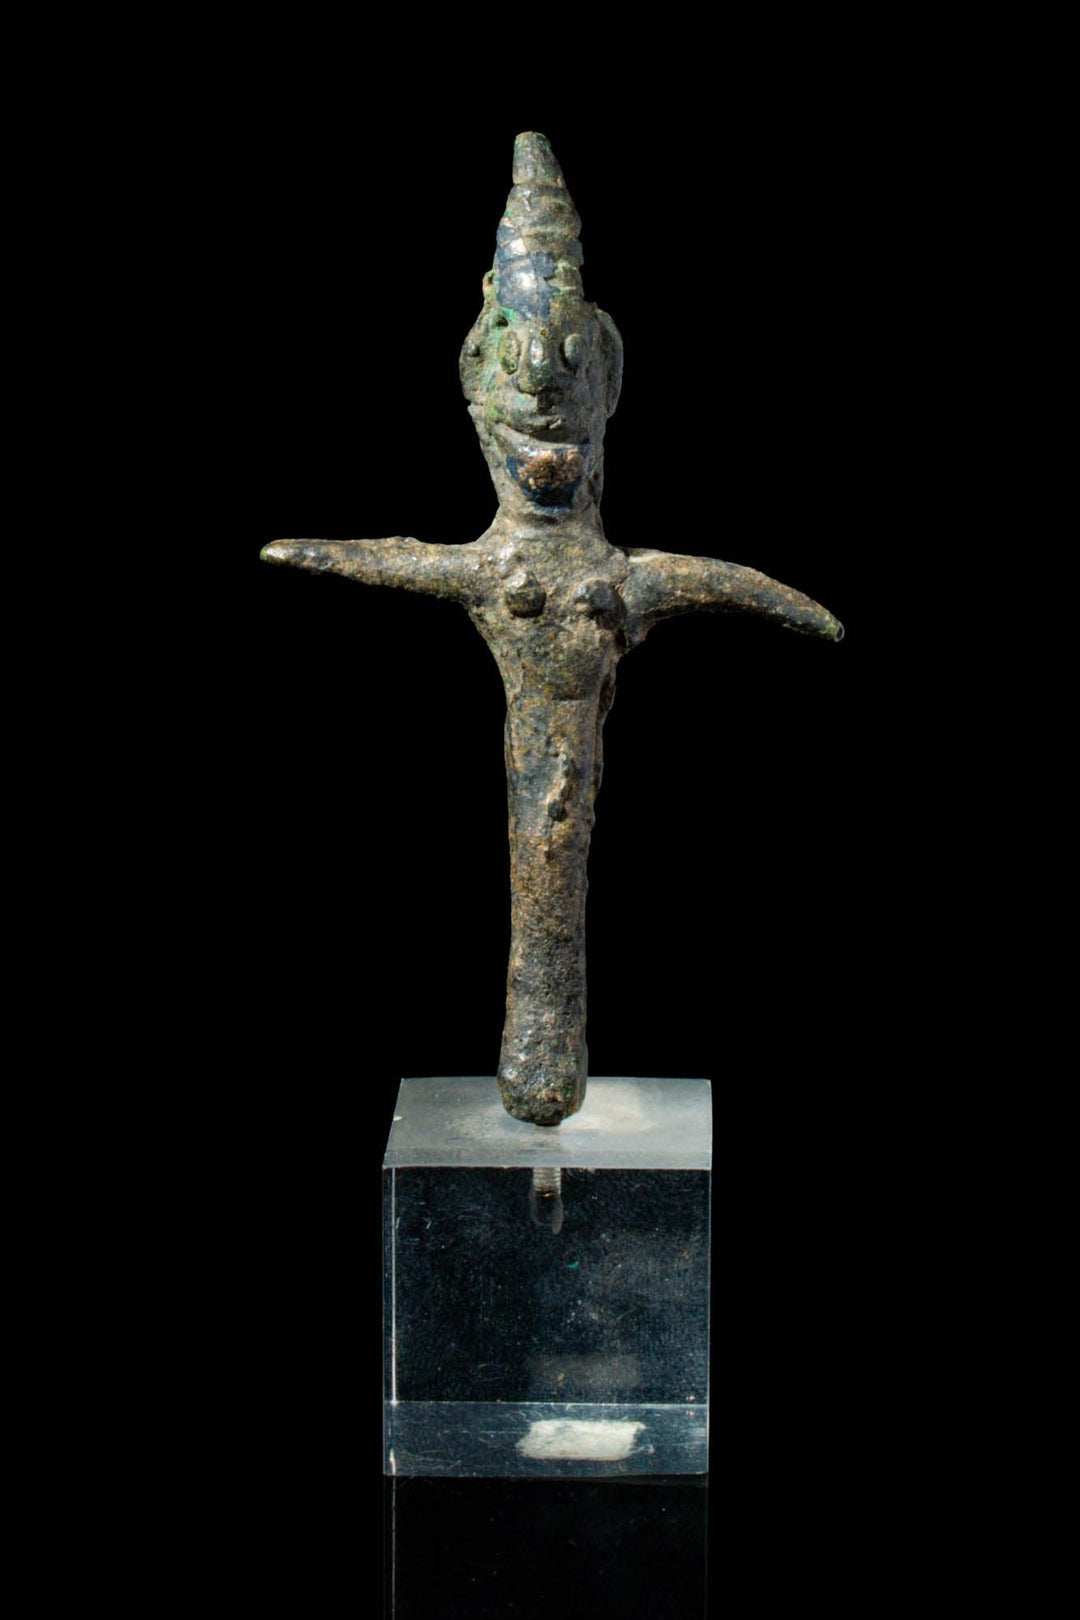 Phoenician Bronze Goddess Statuette - 6th to 4th Century BCE | Ancient Art Form